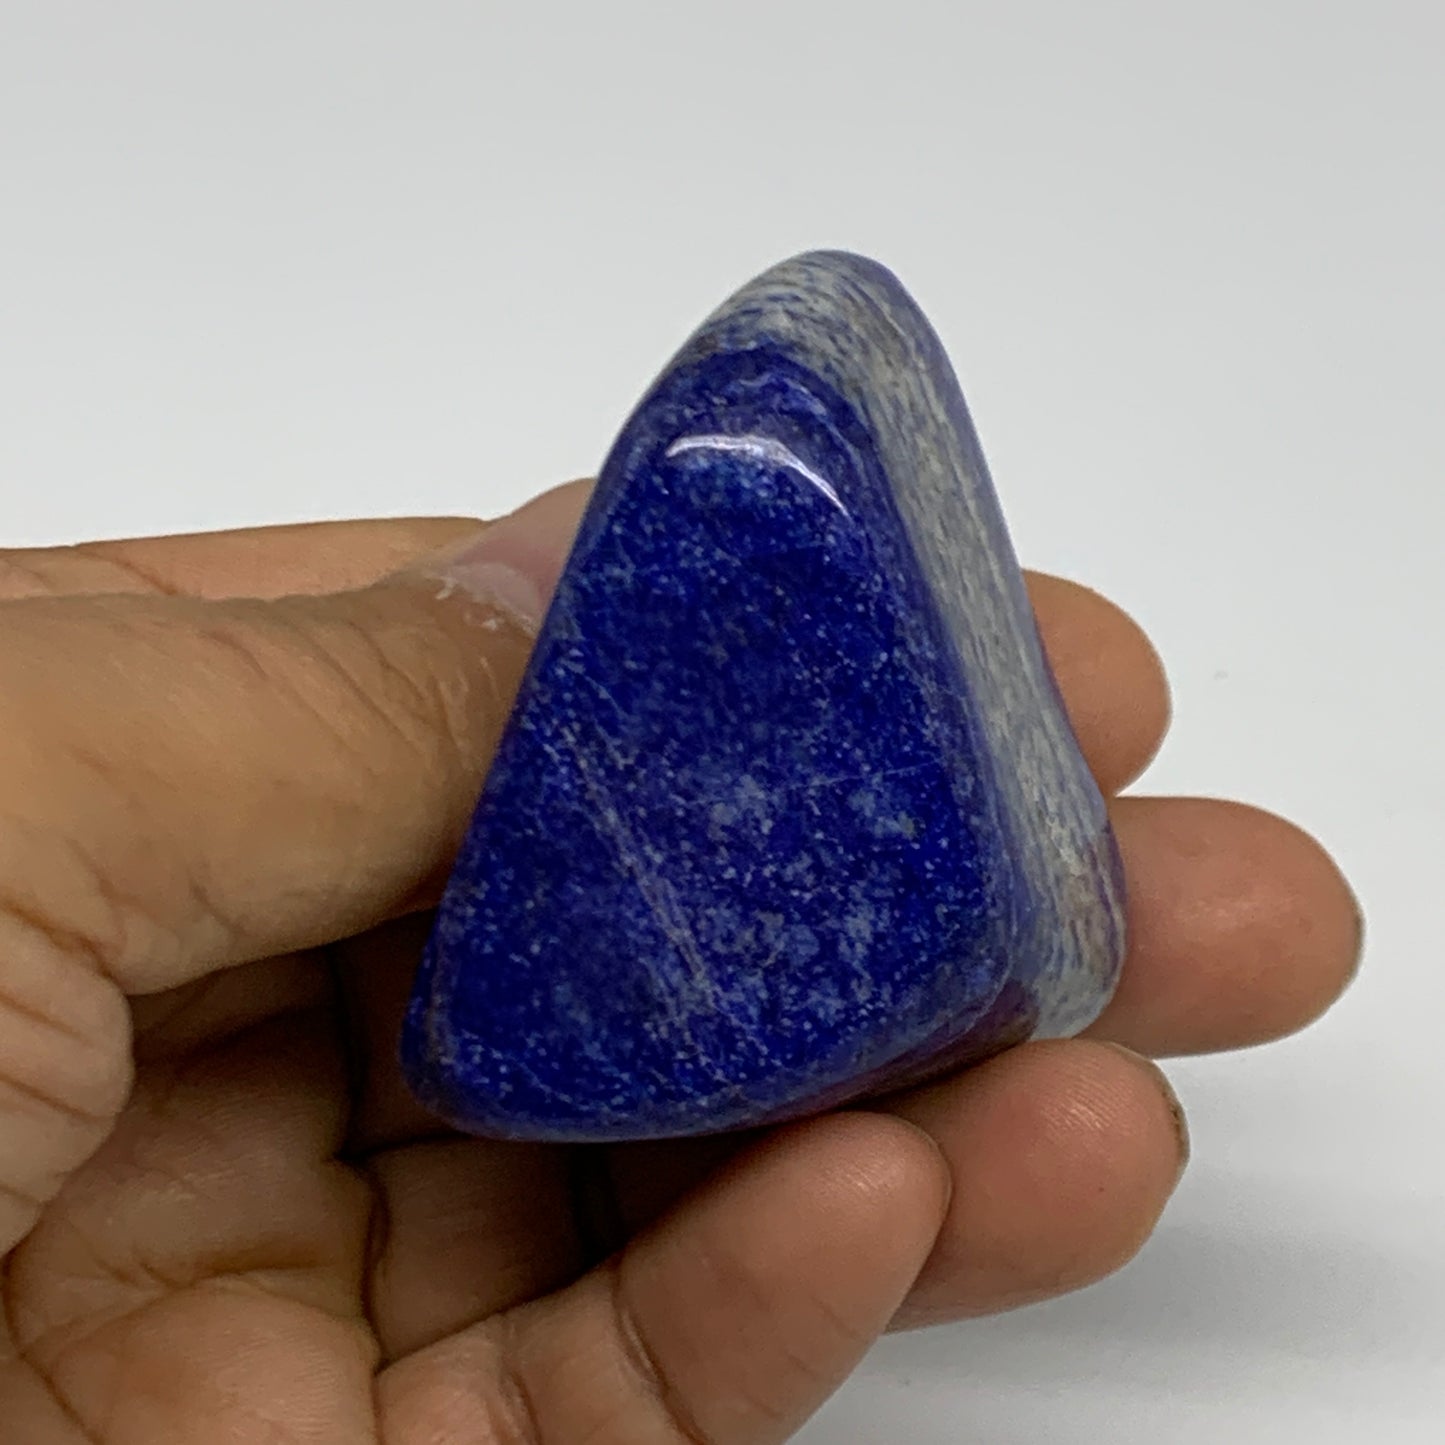 91.1g, 1.9"x1.9"x1.2",  Natural Freeform Lapis Lazuli from Afghanistan, B33091